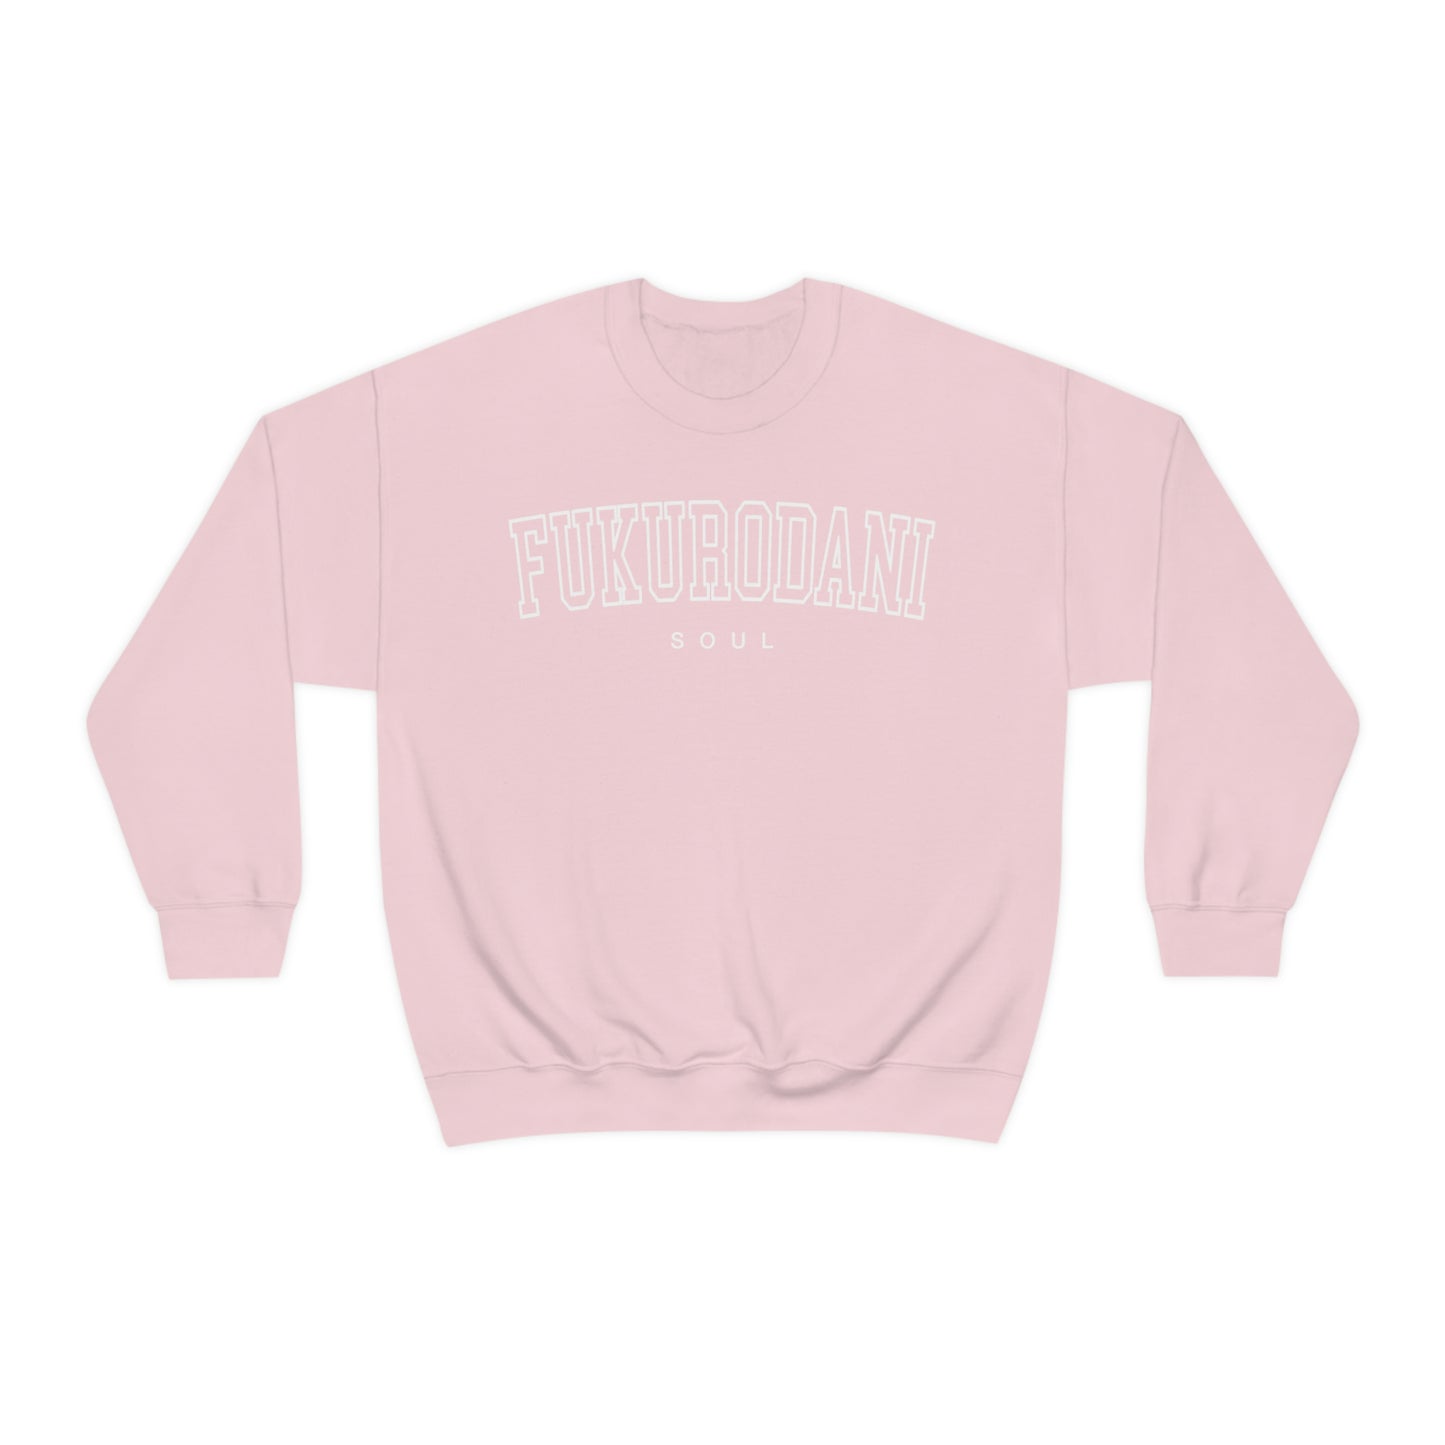 Fukurodanis Slogan Sweatshirt Crew neck Varsity sweatshirt jumper pullover Minimal Anime College Otaku School